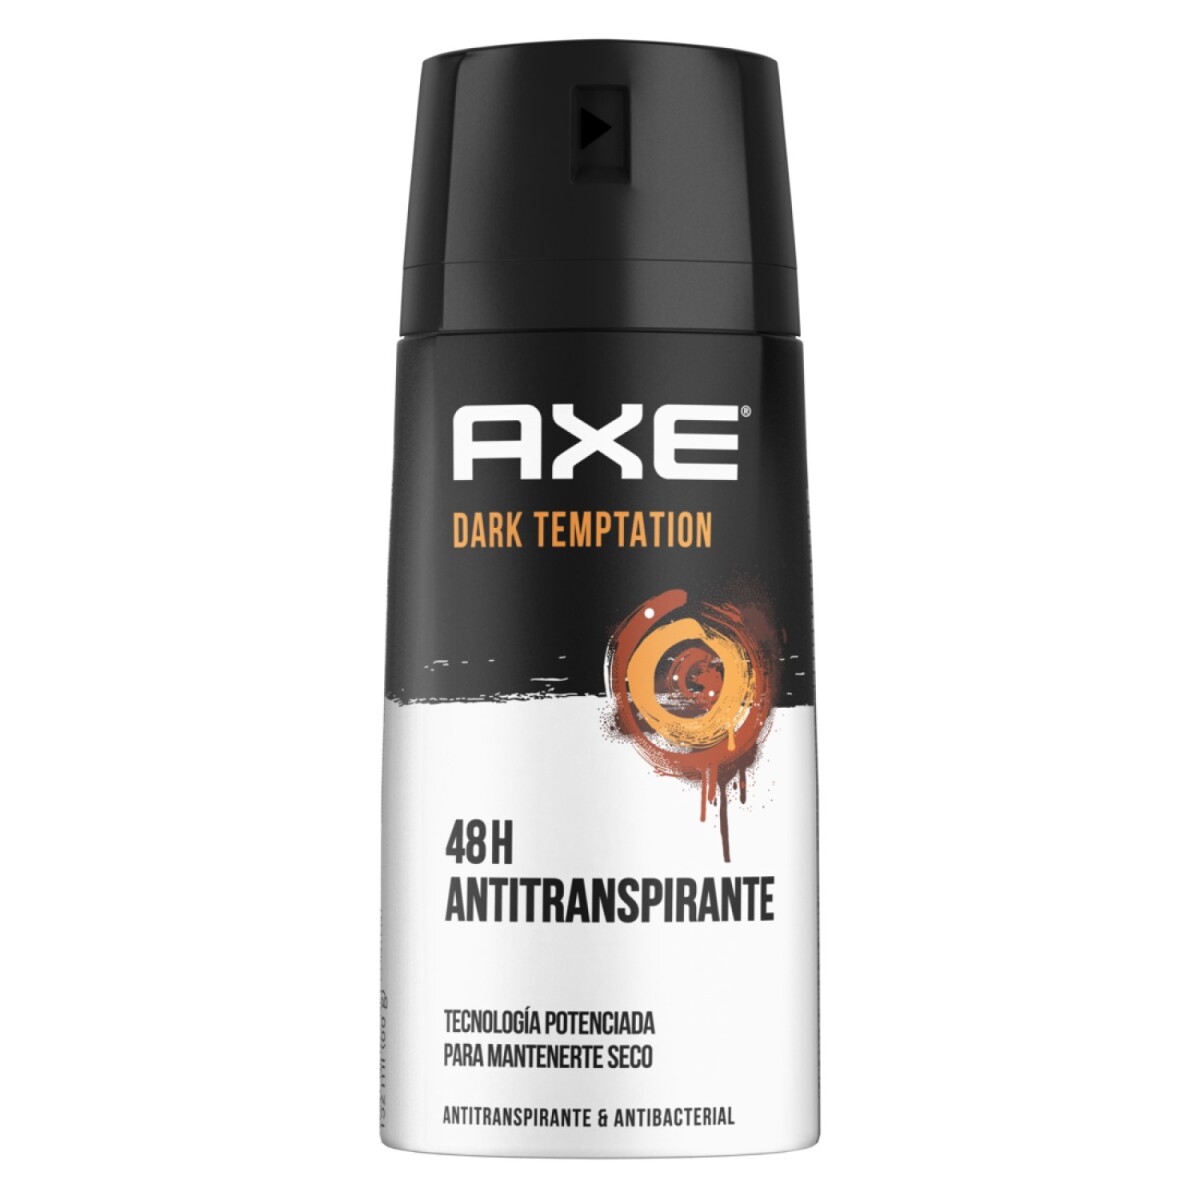 Axe antritranspirante 48 h - Dark Temptation 